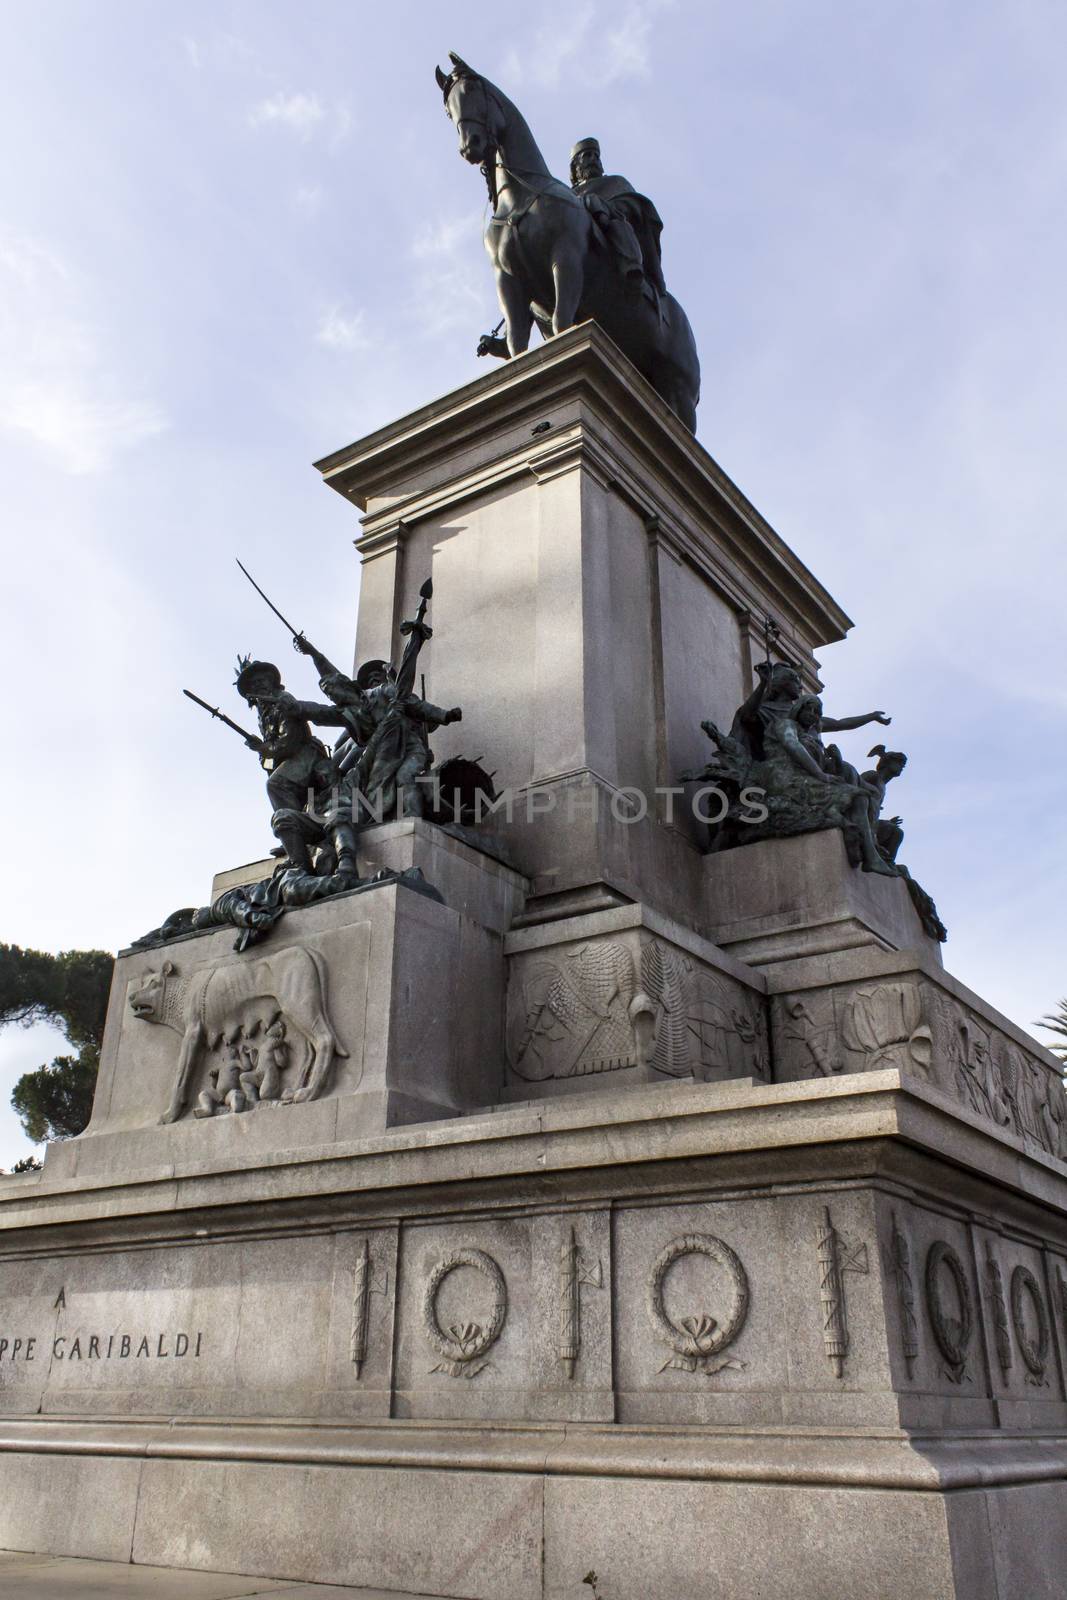 Statua Piazza Garibaldi Roma by StefanoAngeloni